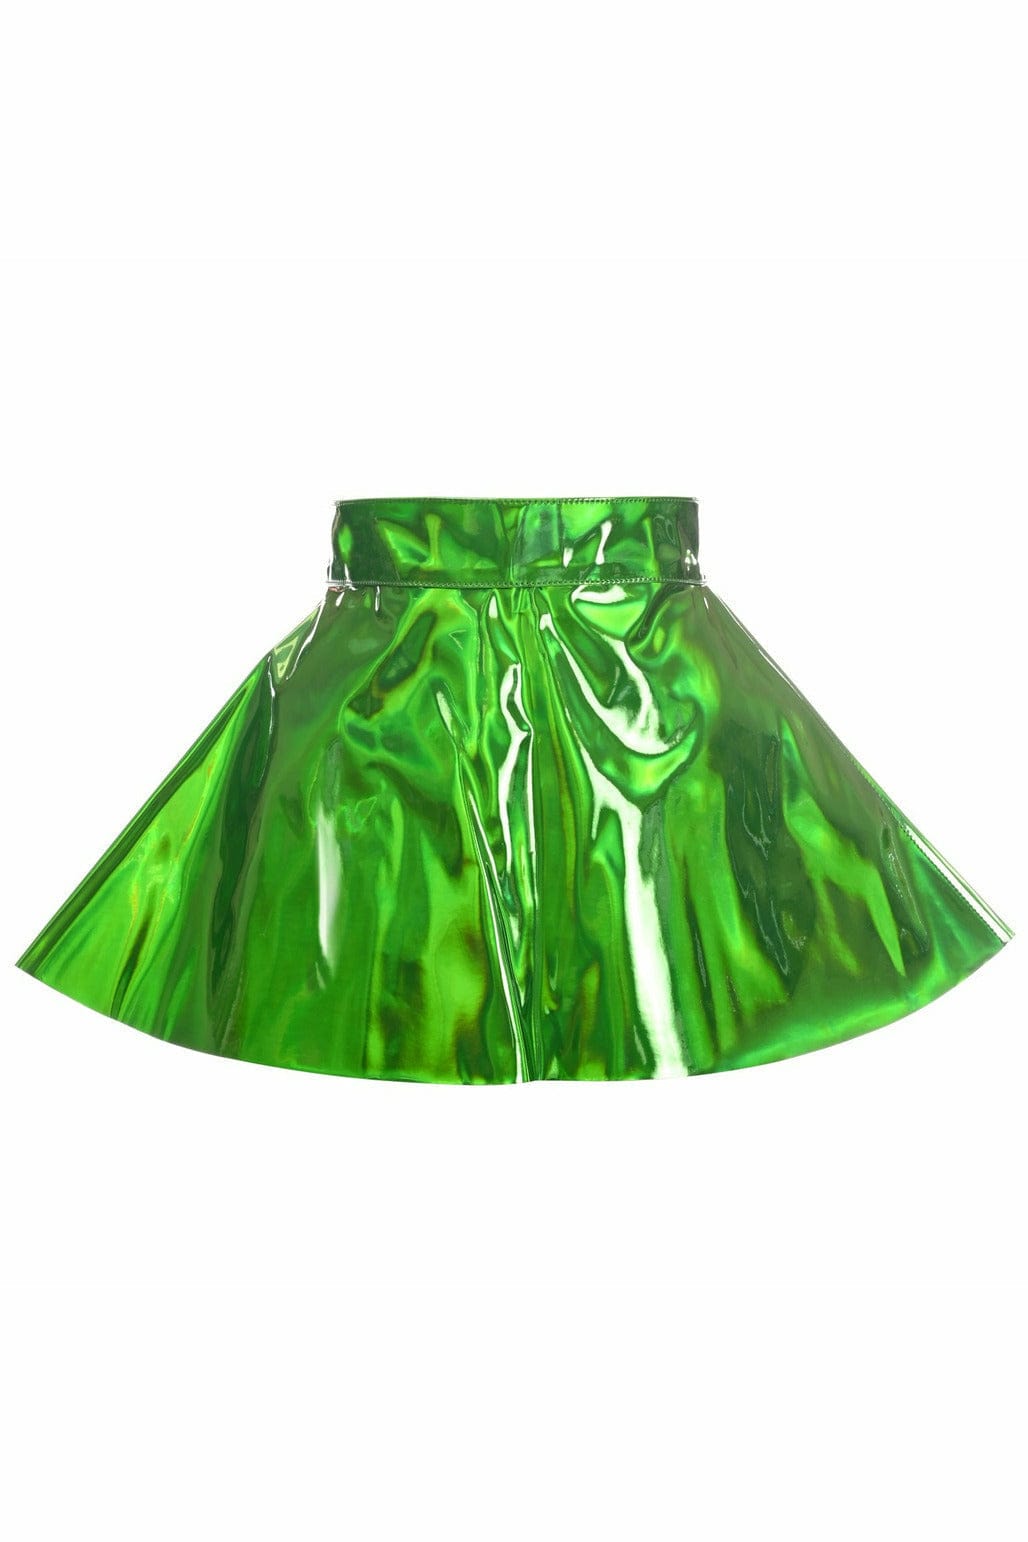 Green Hologram Skater Skirt Musotica.com